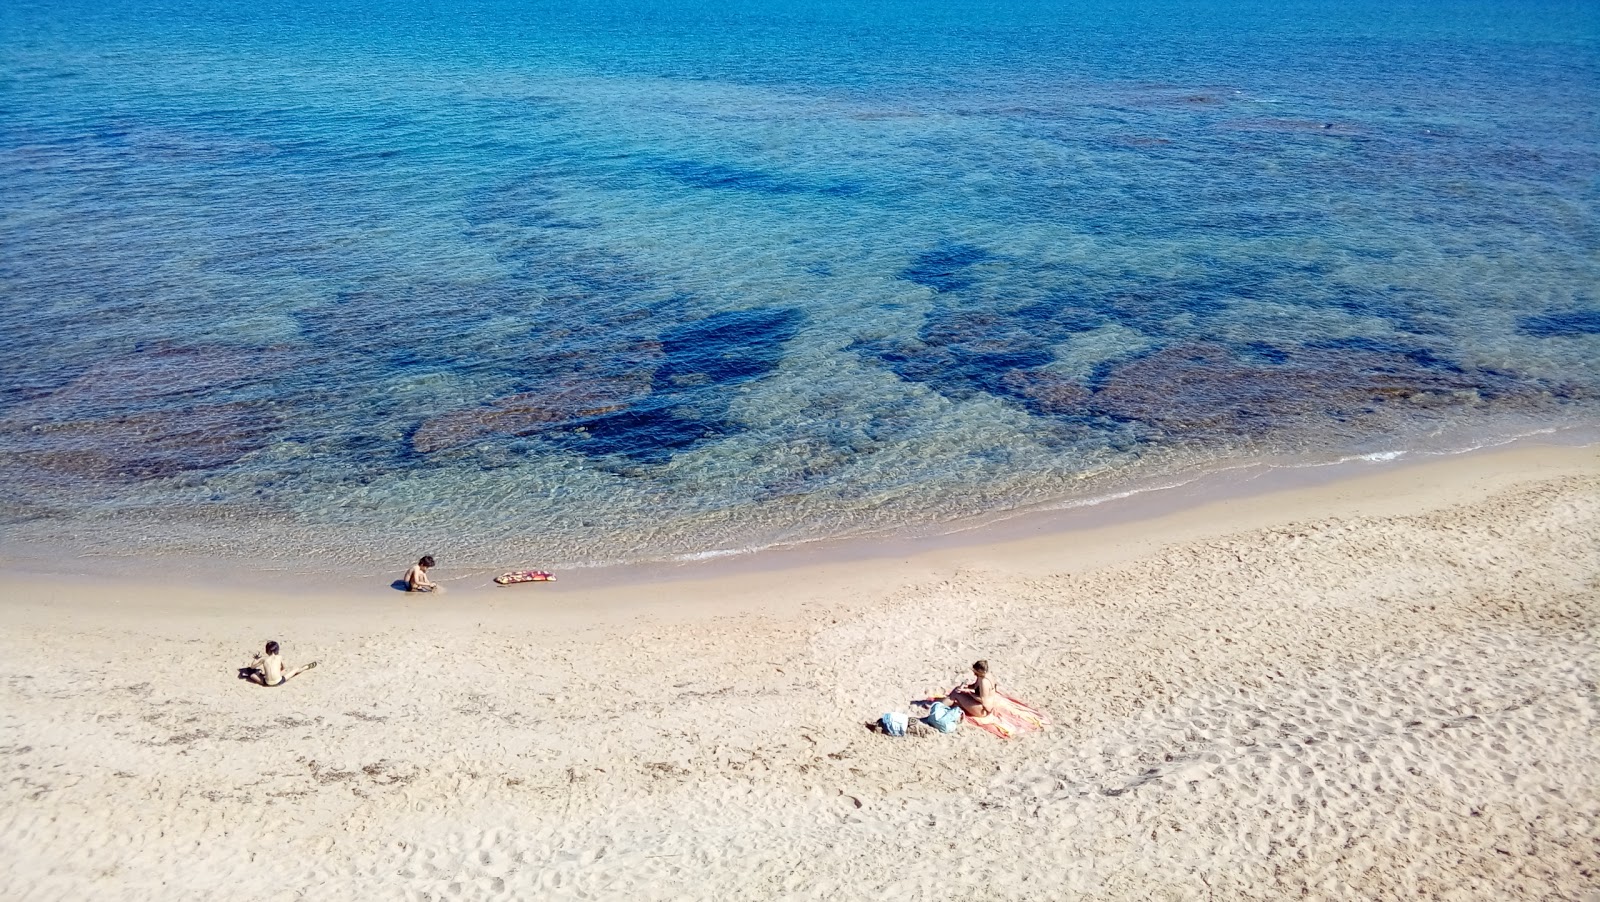 Photo of Spiaggia della Madonnina with brown sand surface